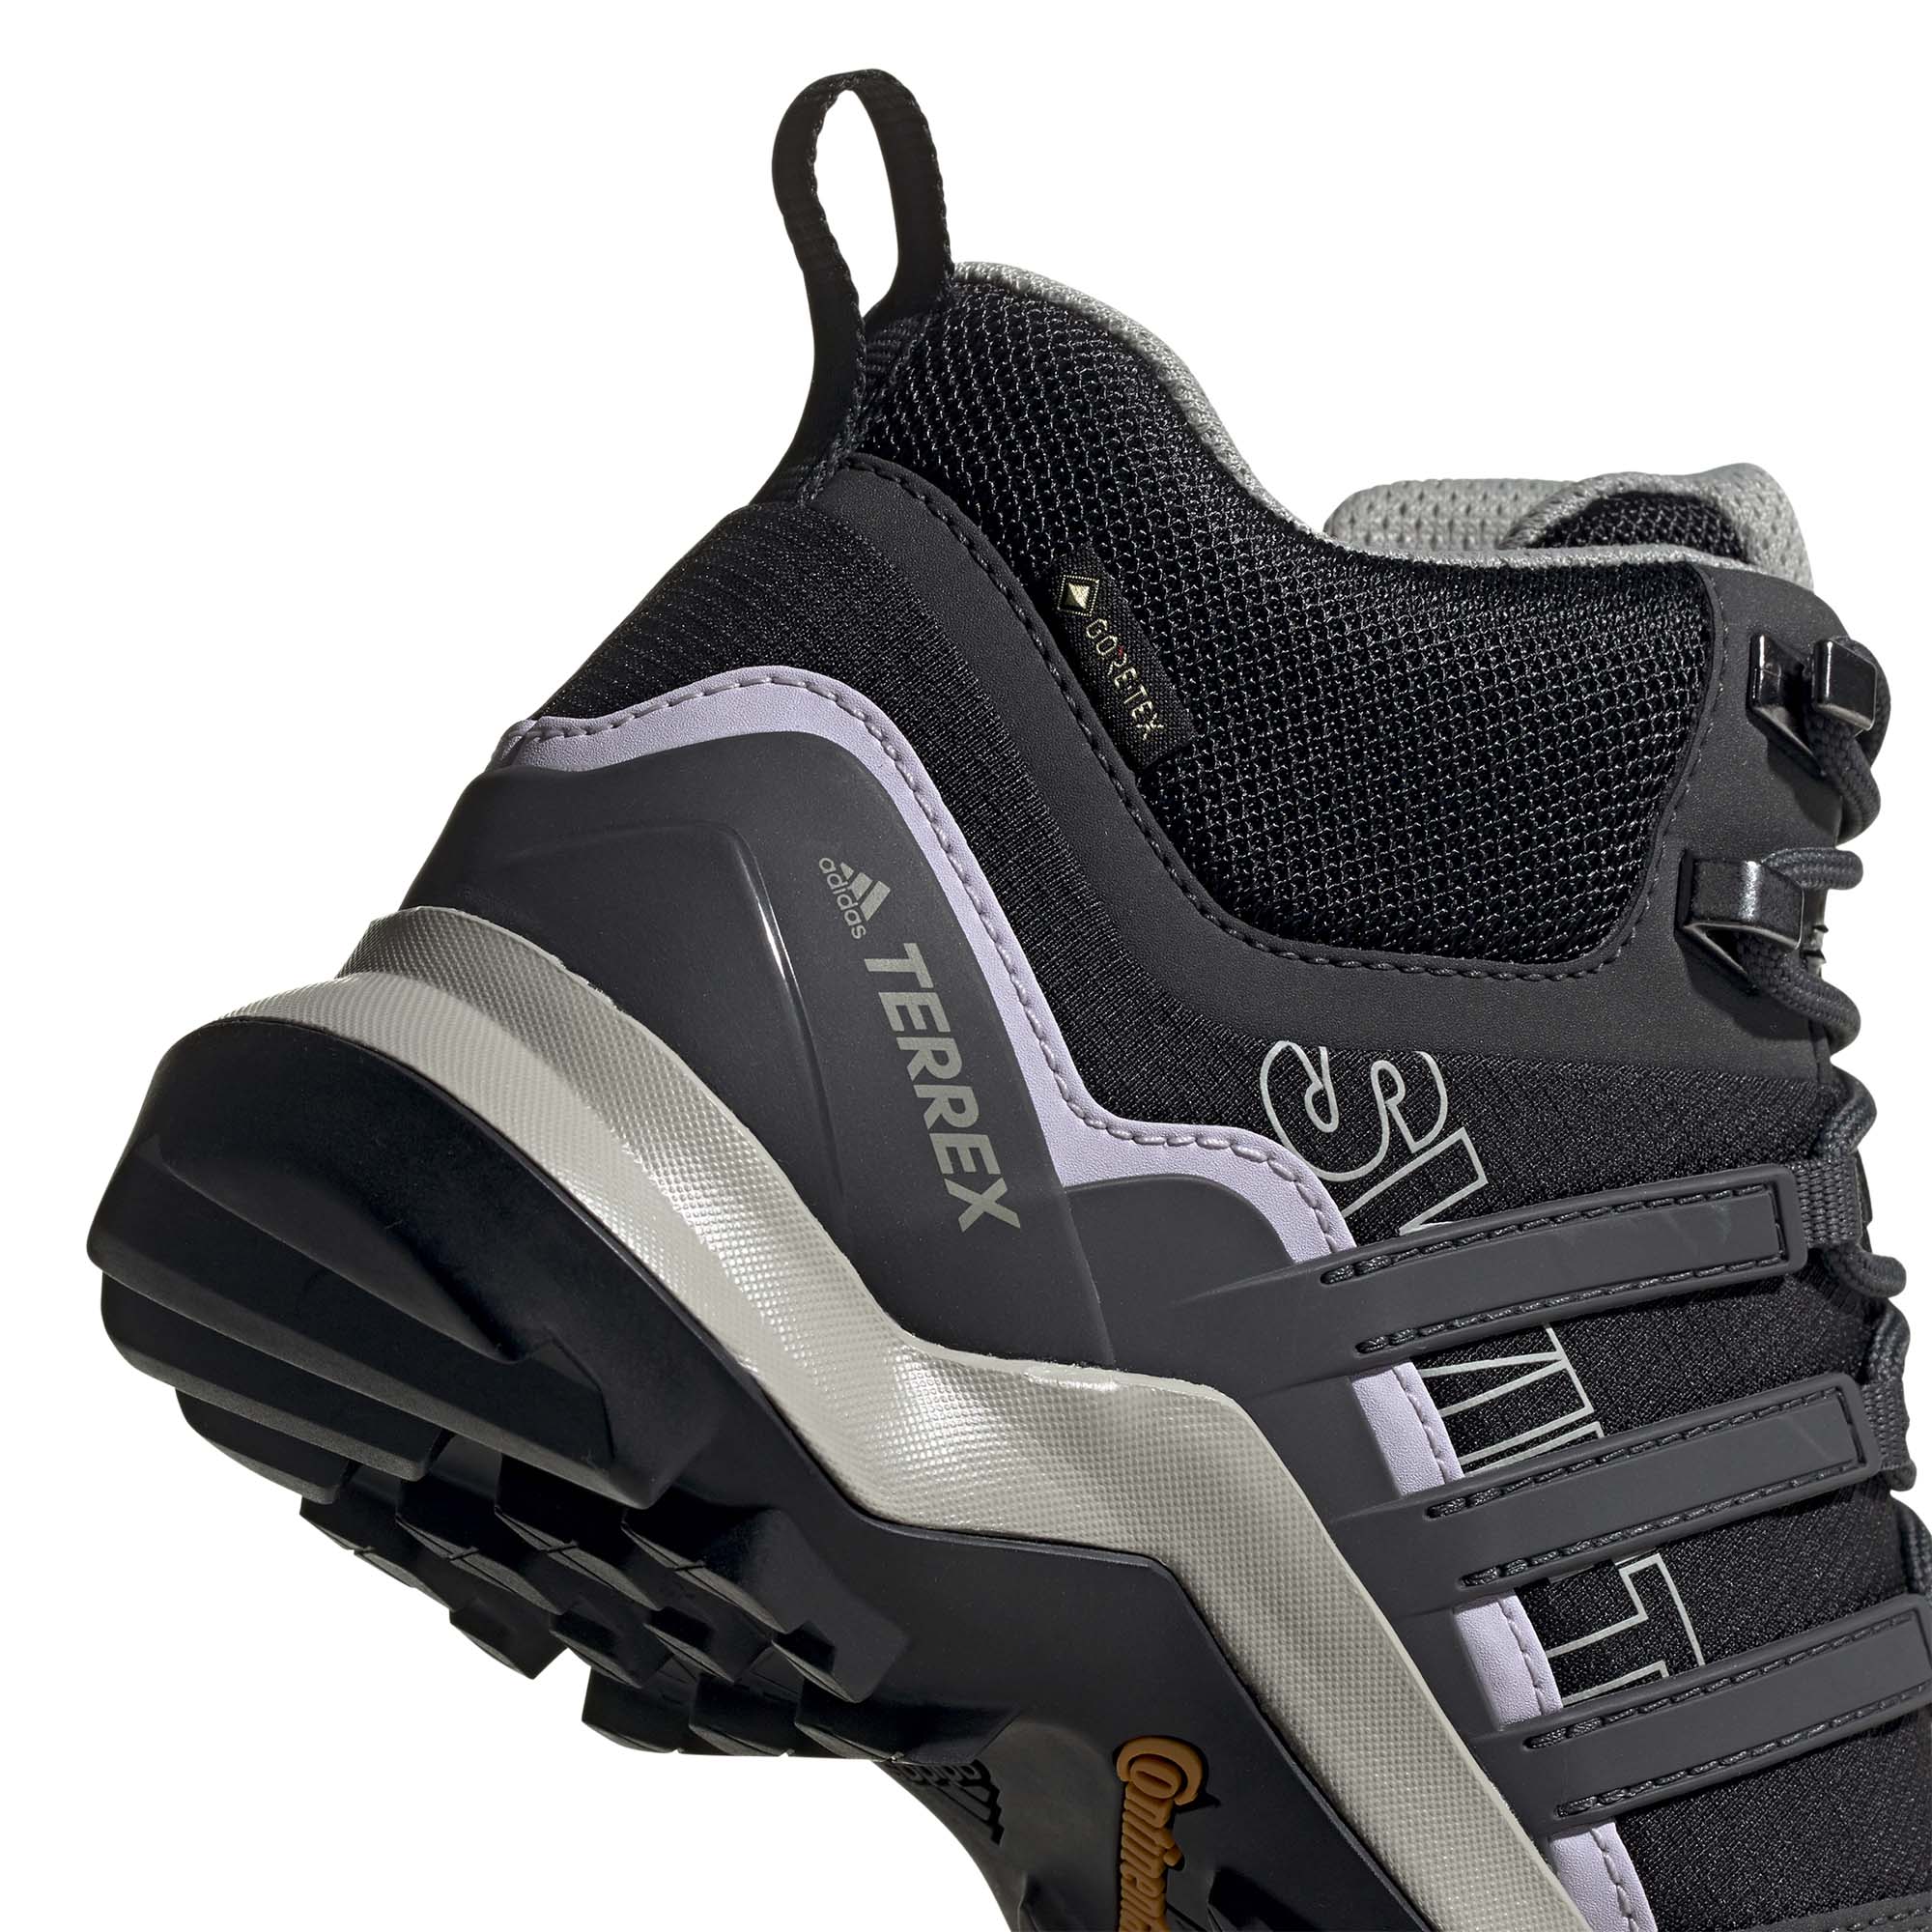 Adidas Terrex Swift R2 Mid GTX Women's Walking Shoes